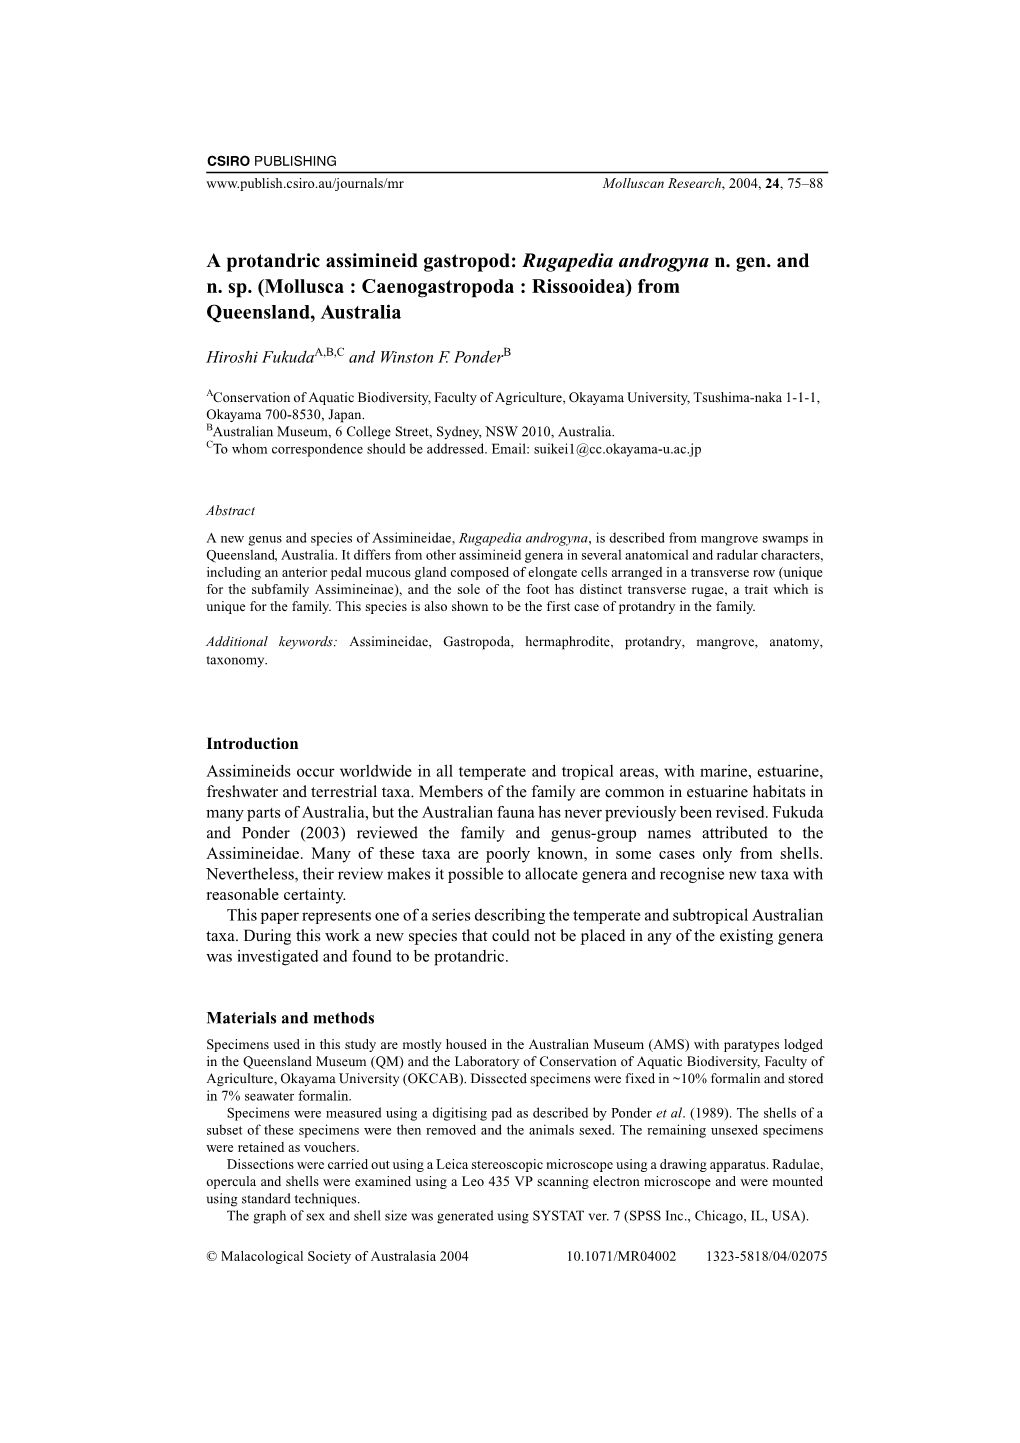 A Protandric Assimineid Gastropod: Rugapedia Androgyna N. Gen. and N